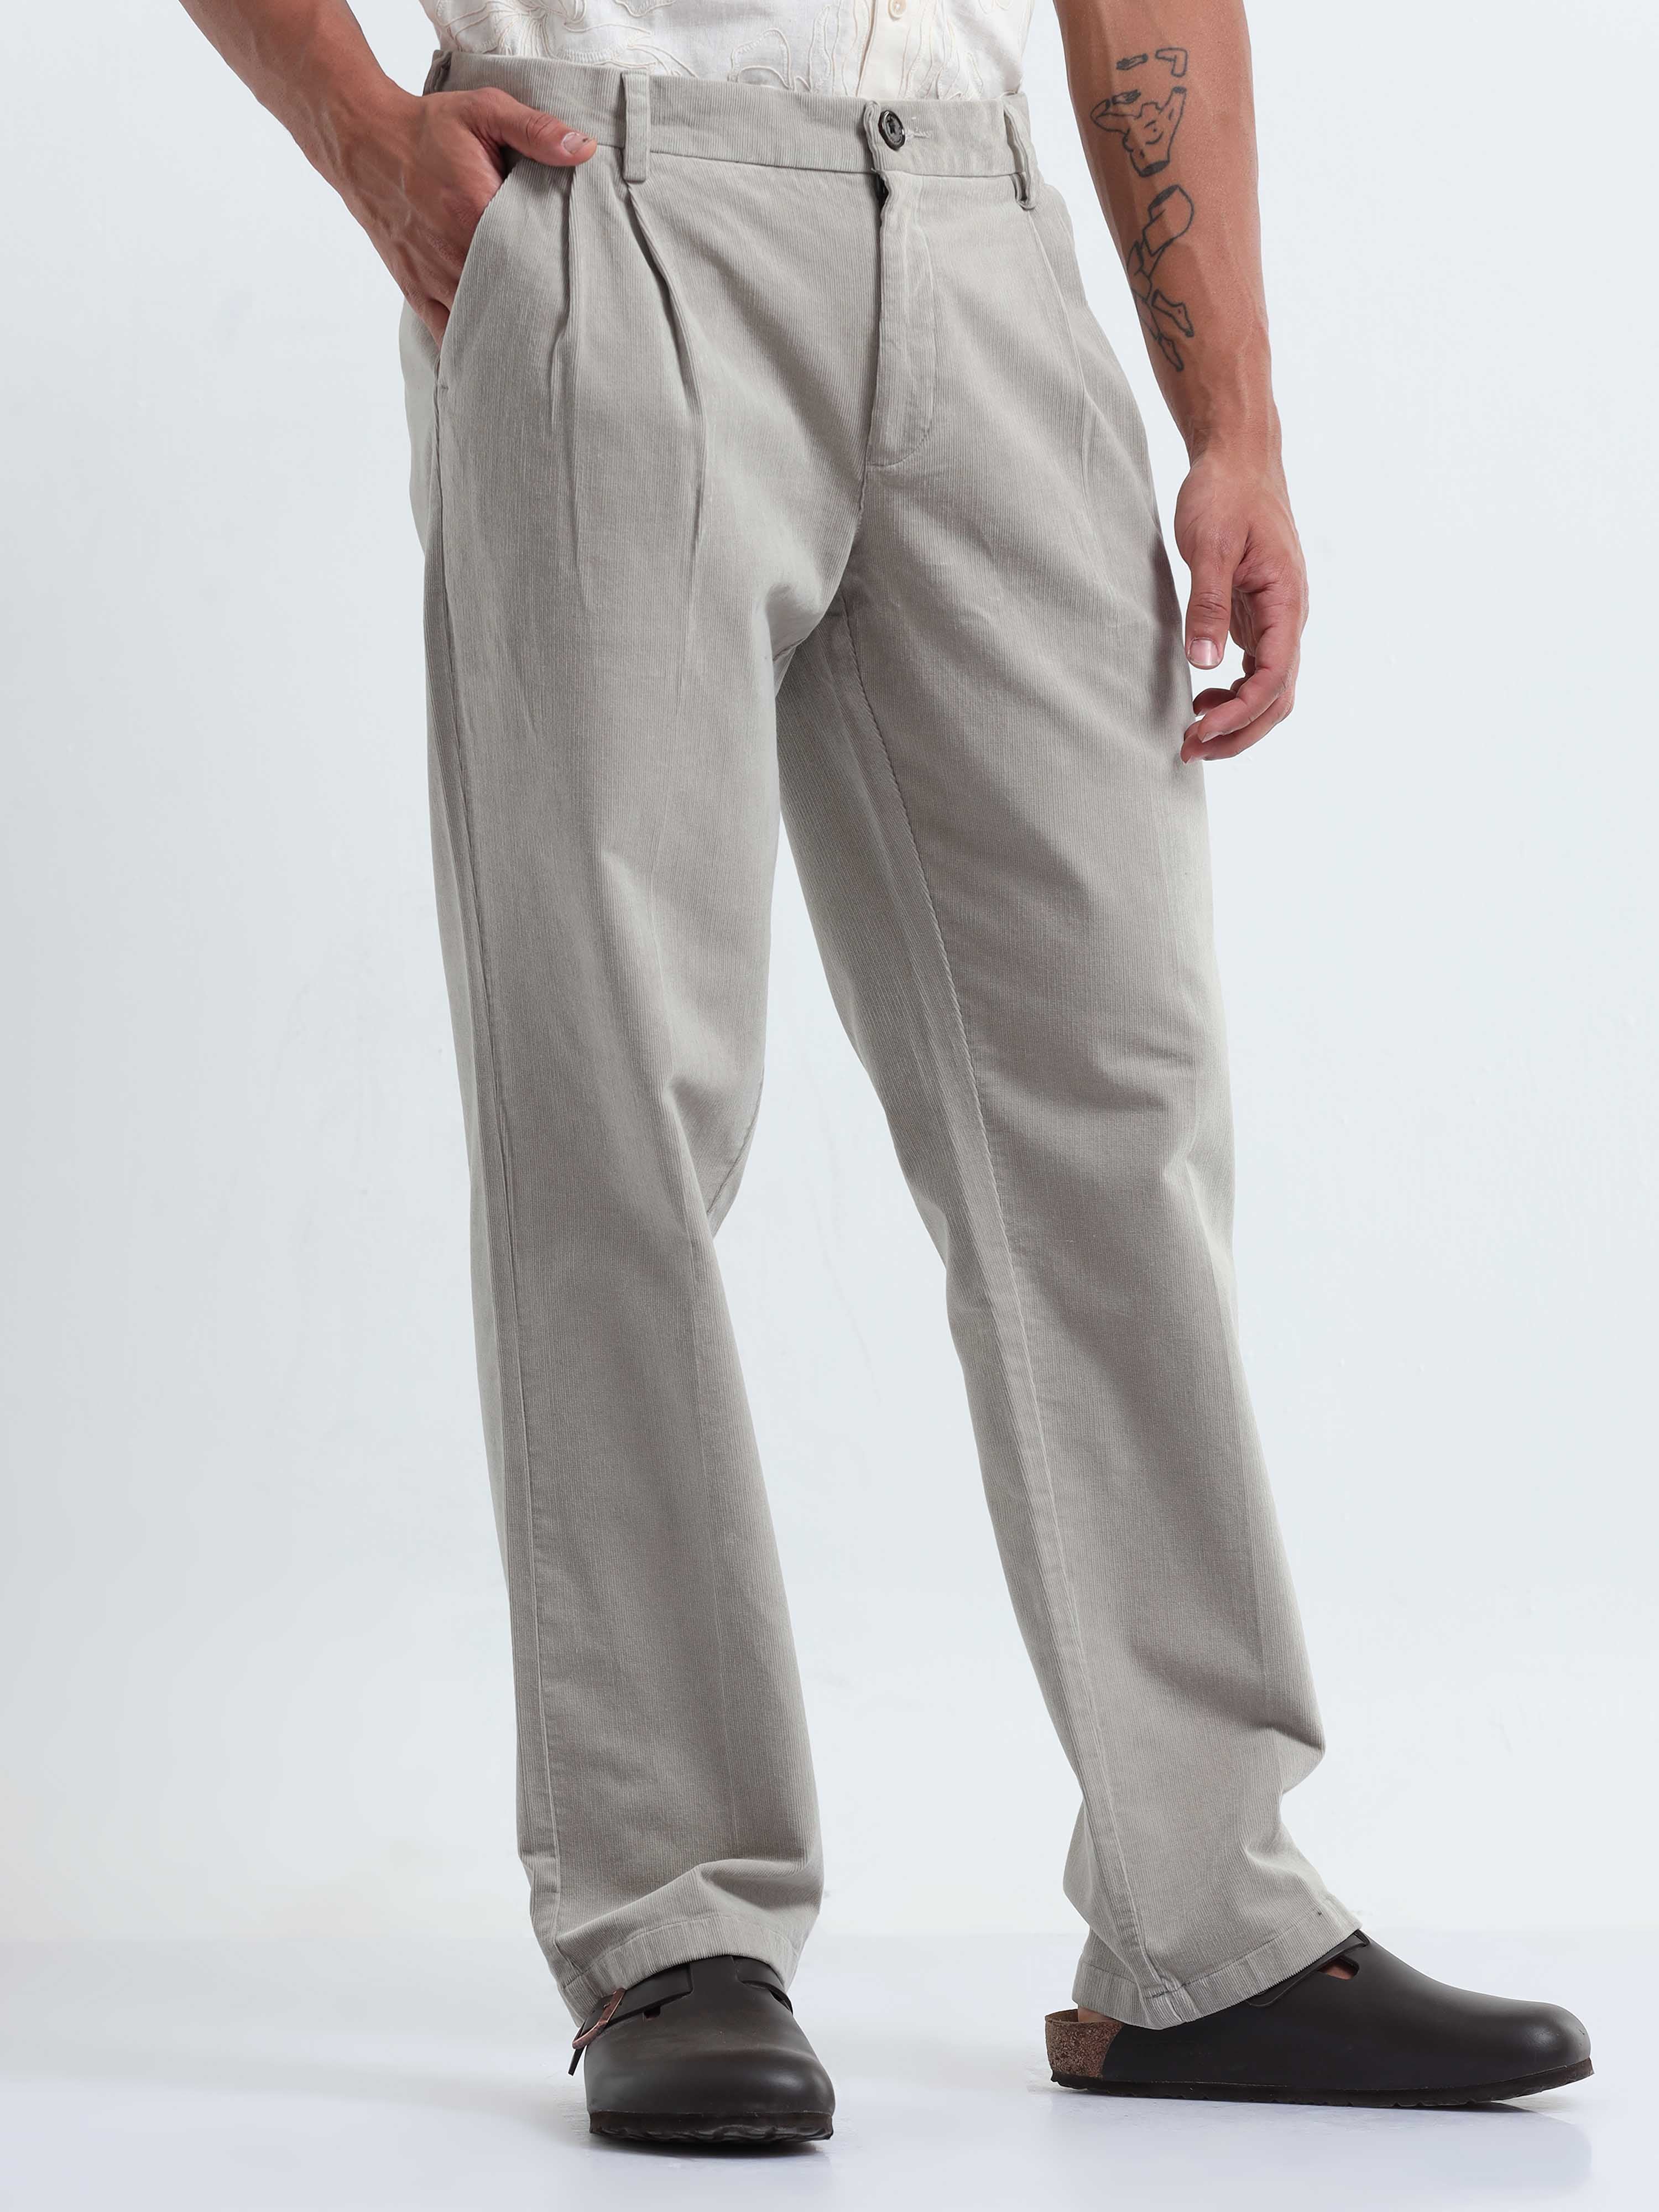 Mens Grey Corduroy Pants